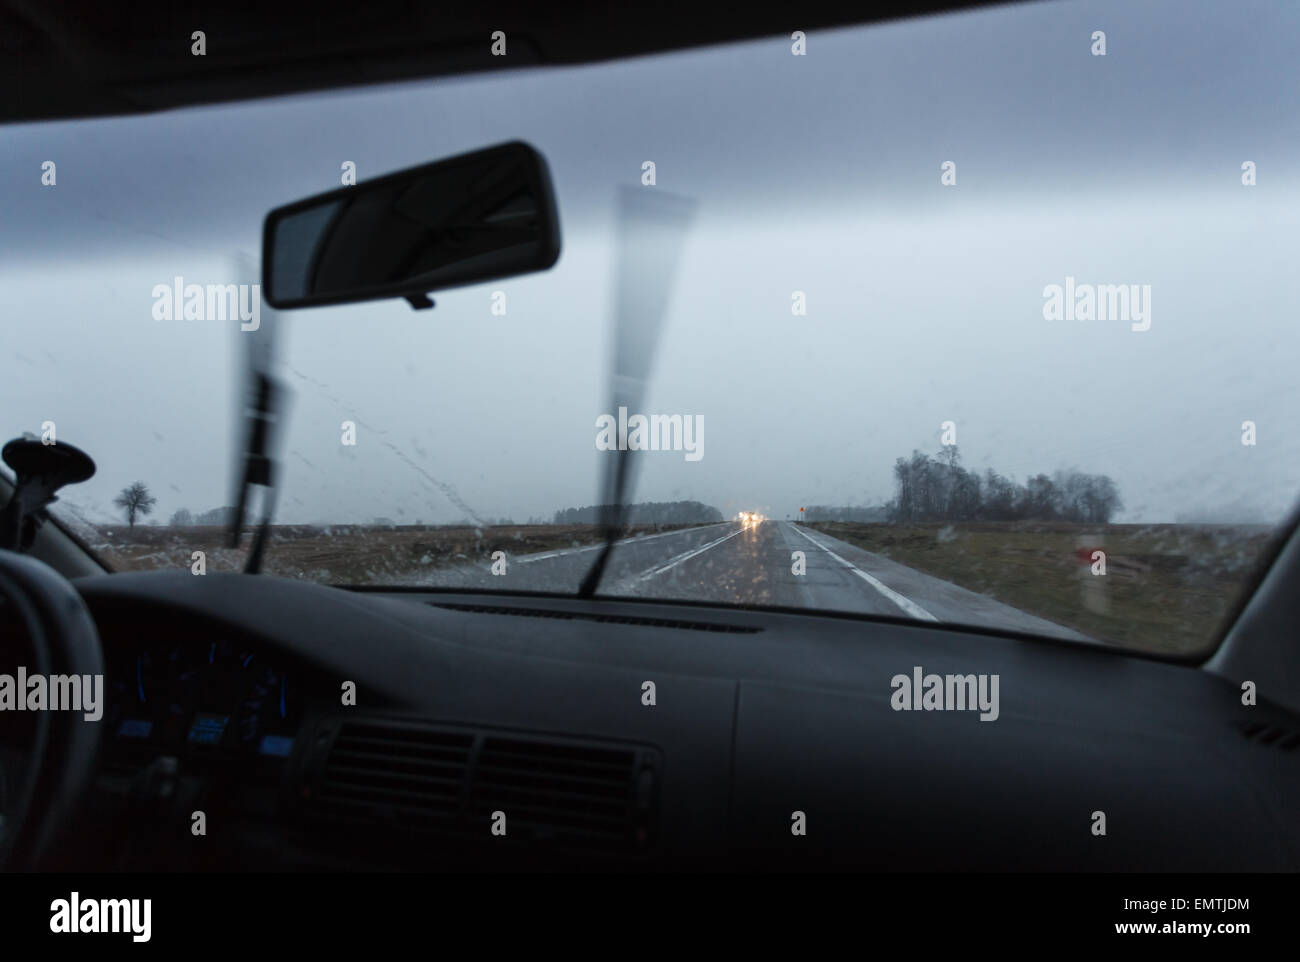 https://c8.alamy.com/comp/EMTJDM/bad-weather-conditions-driving-a-car-wipers-working-EMTJDM.jpg